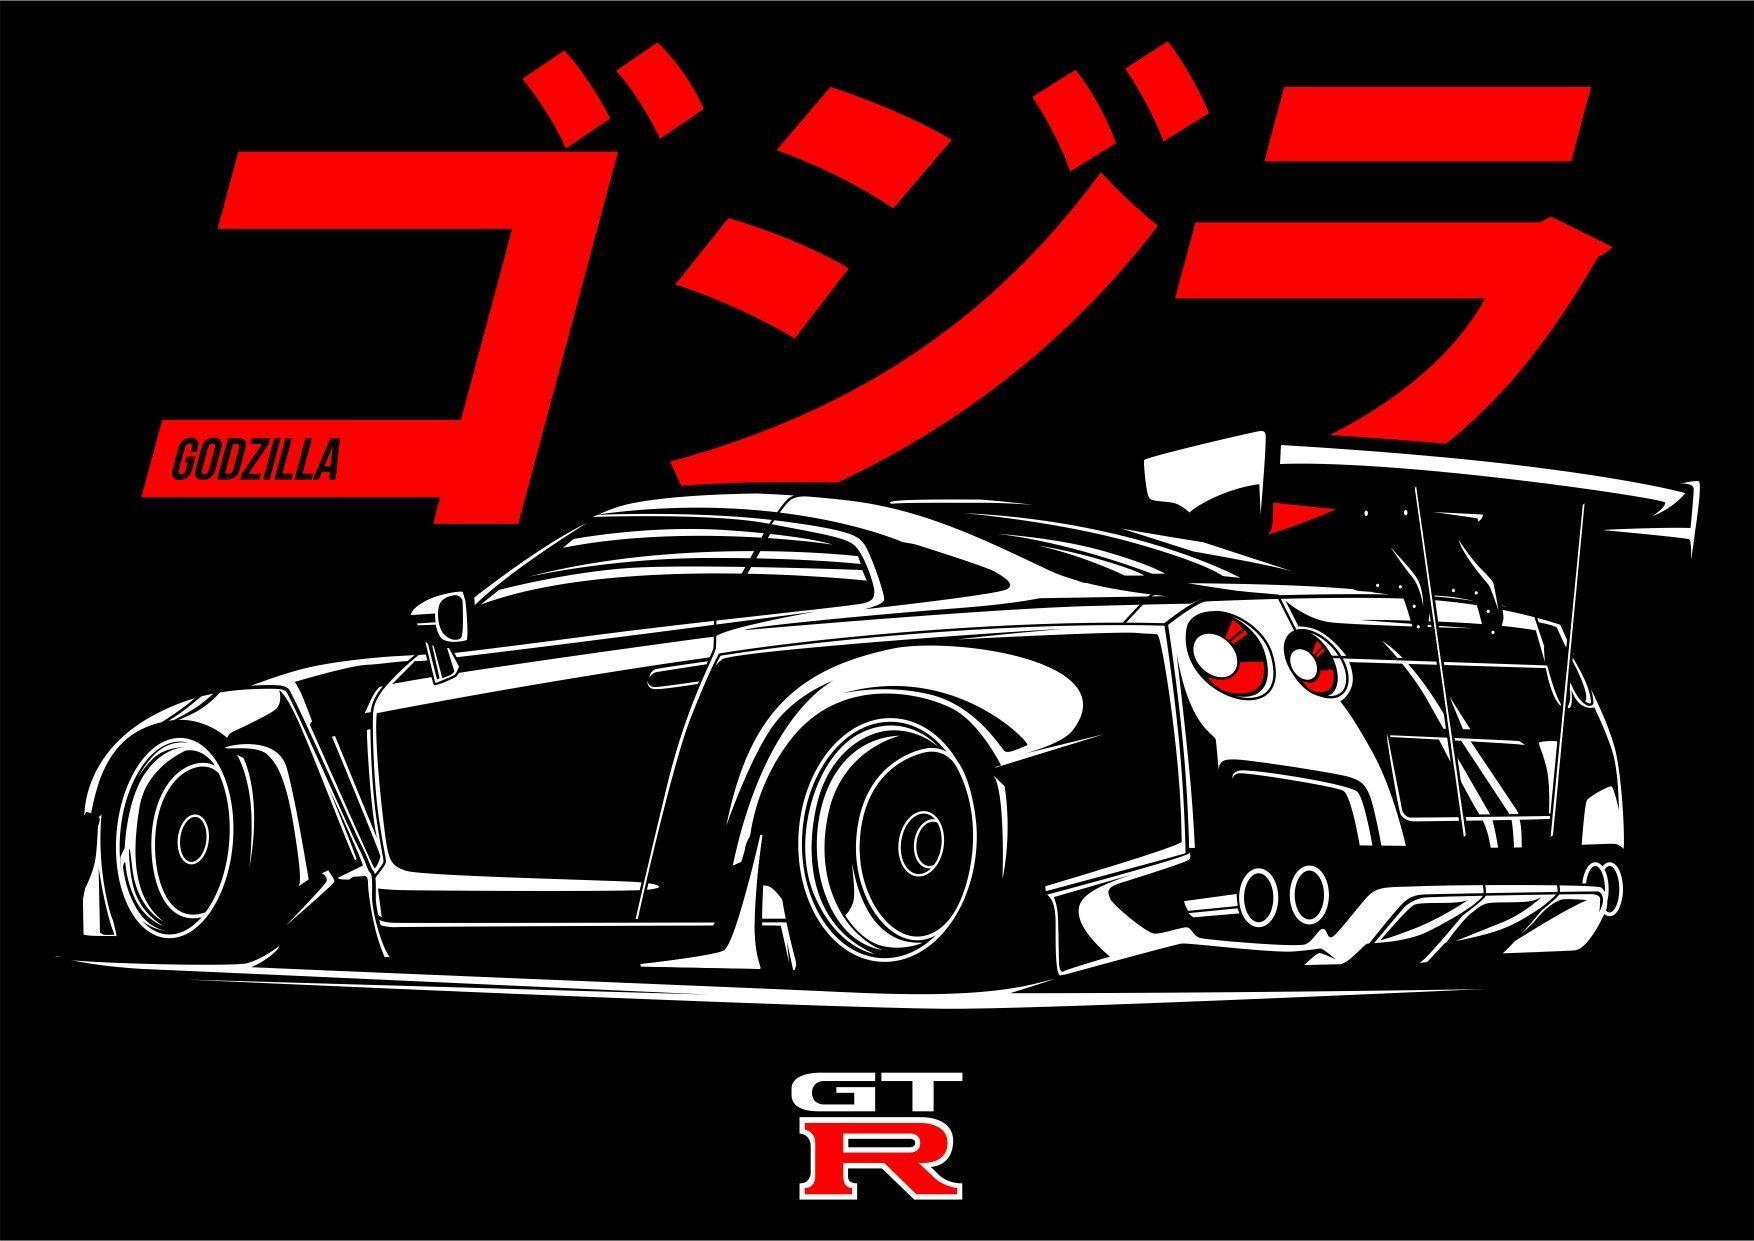 Godzilla GTR Logo - Godzilla GTR Rocket Bunny. Cars. Cars, Cars